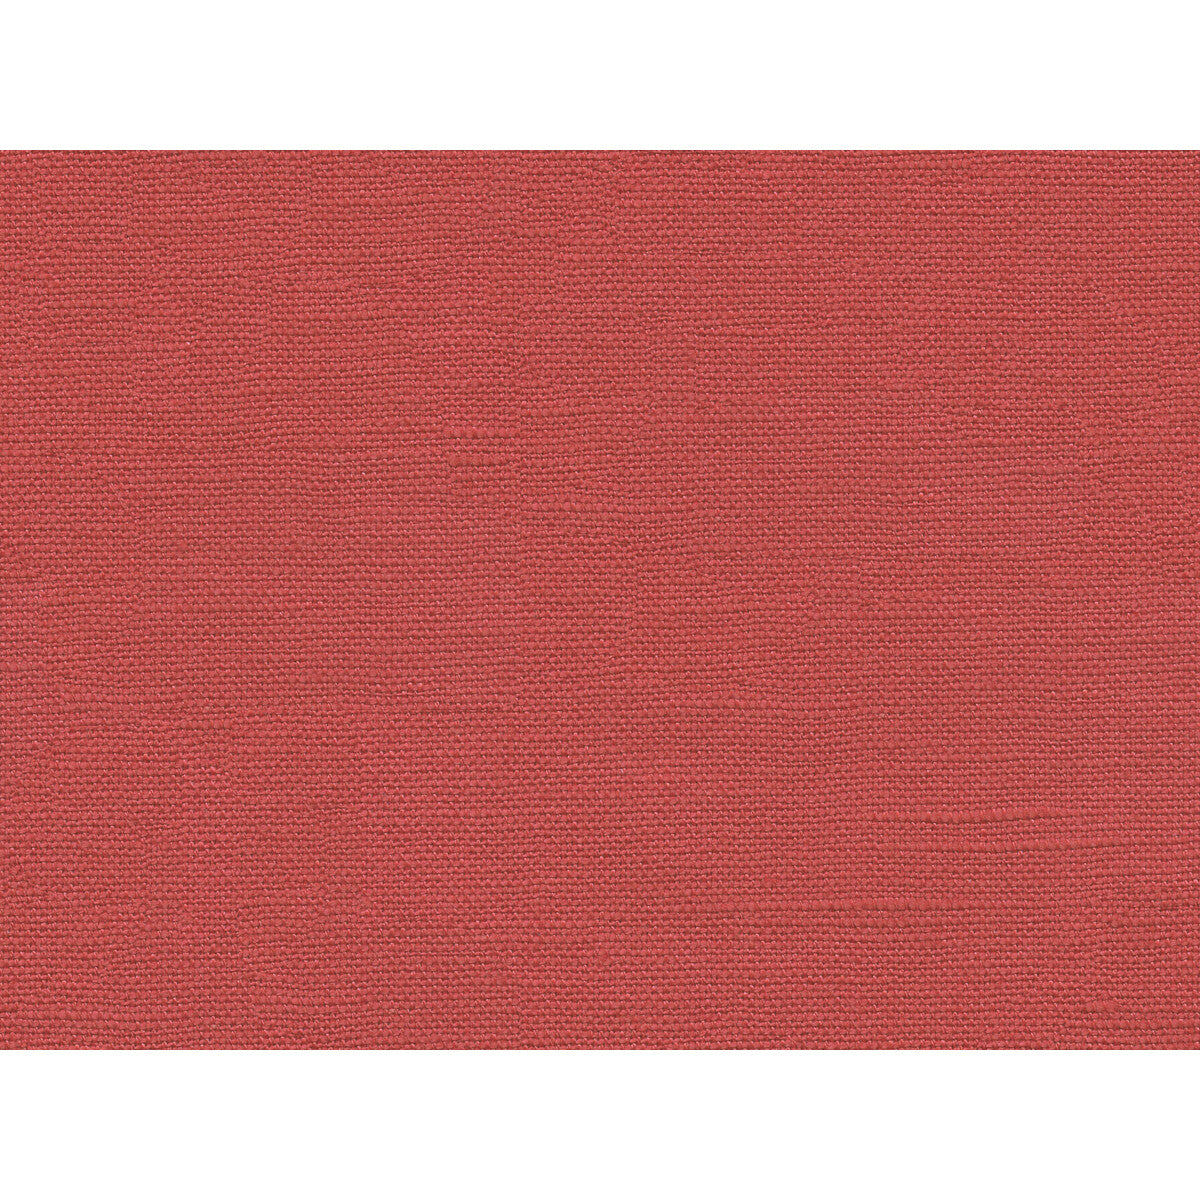 Kravet Smart fabric in 34960-77 color - pattern 34960.77.0 - by Kravet Smart in the Performance Kravetarmor collection